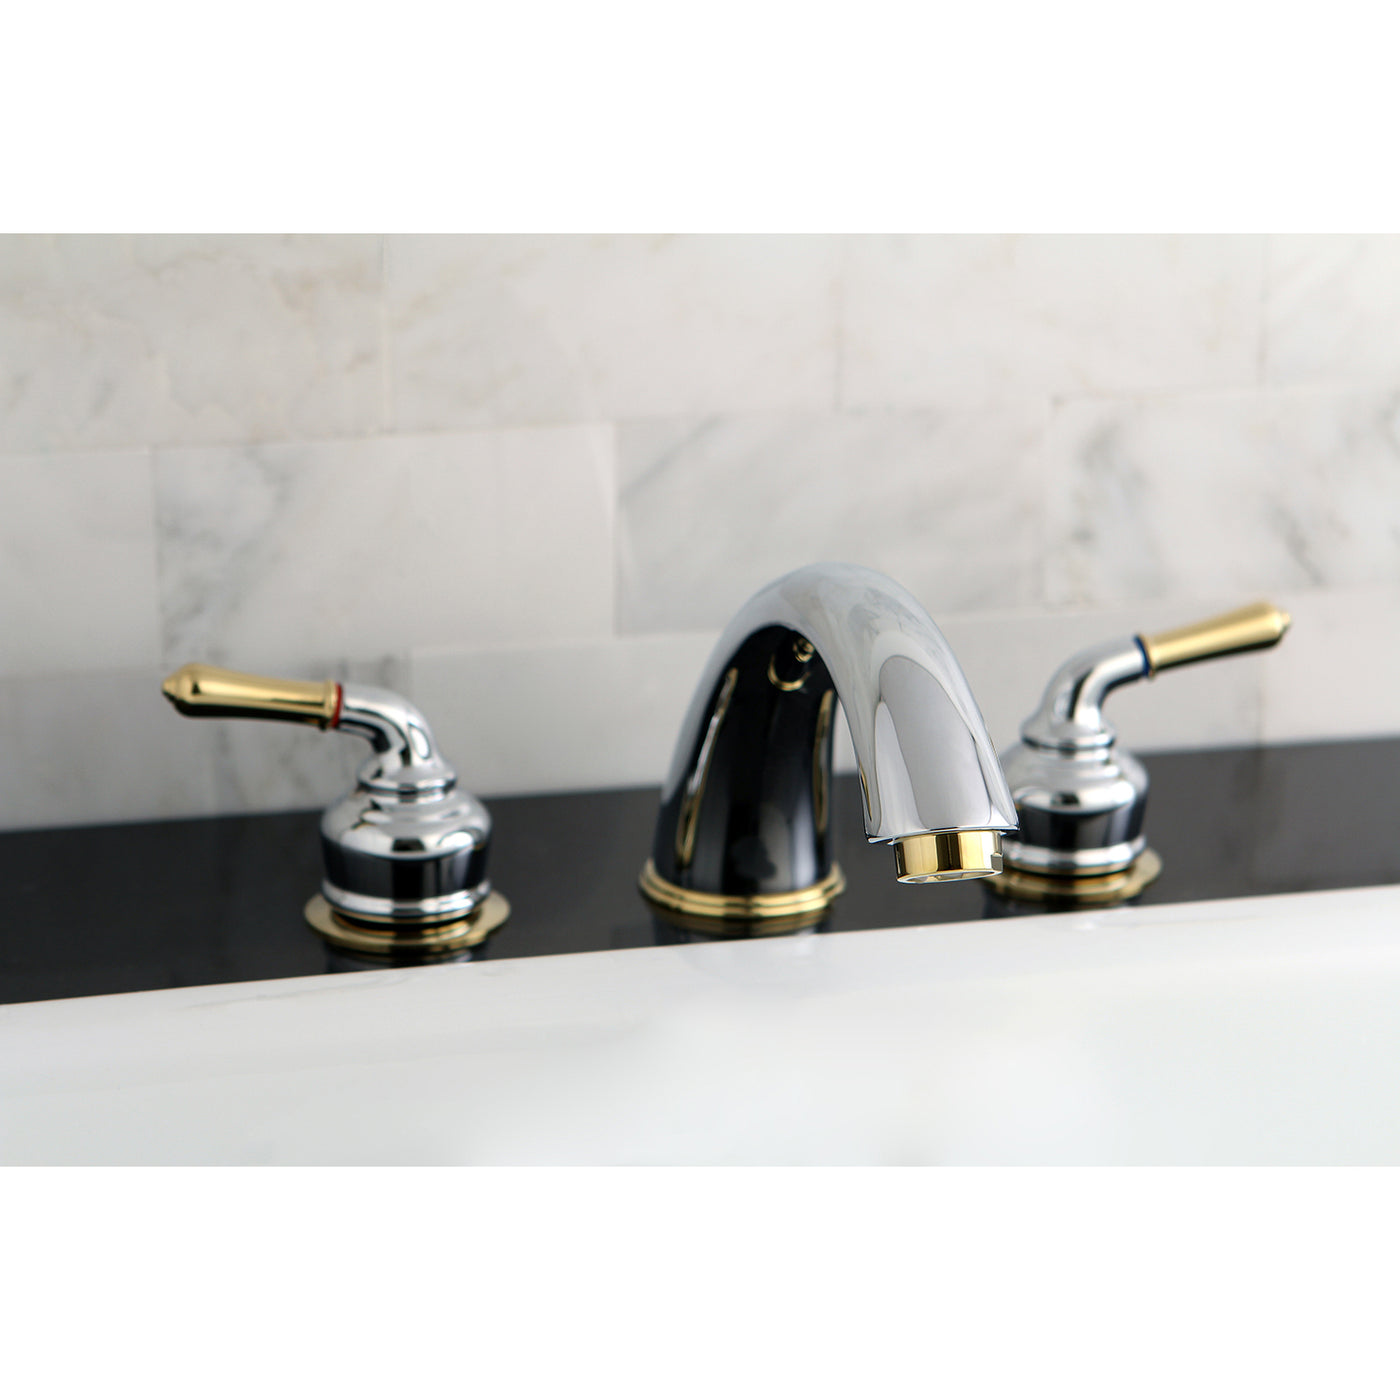 Elements of Design EC364 Roman Tub Faucet, Polished Chrome/Polished Brass